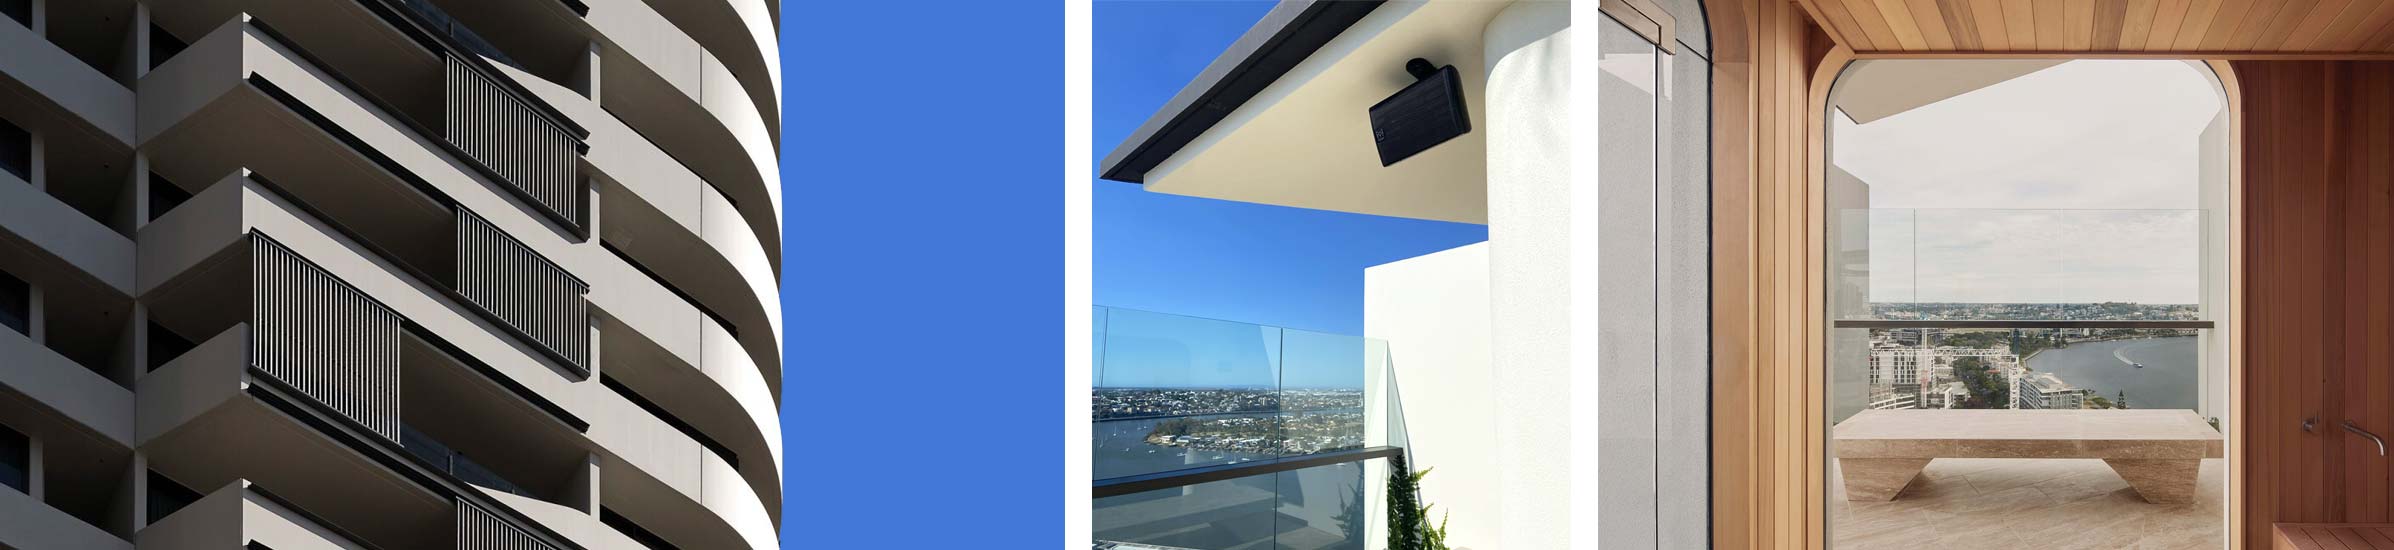 Luminare Rooftop AV Install by Ampd Electronics in Brisbane